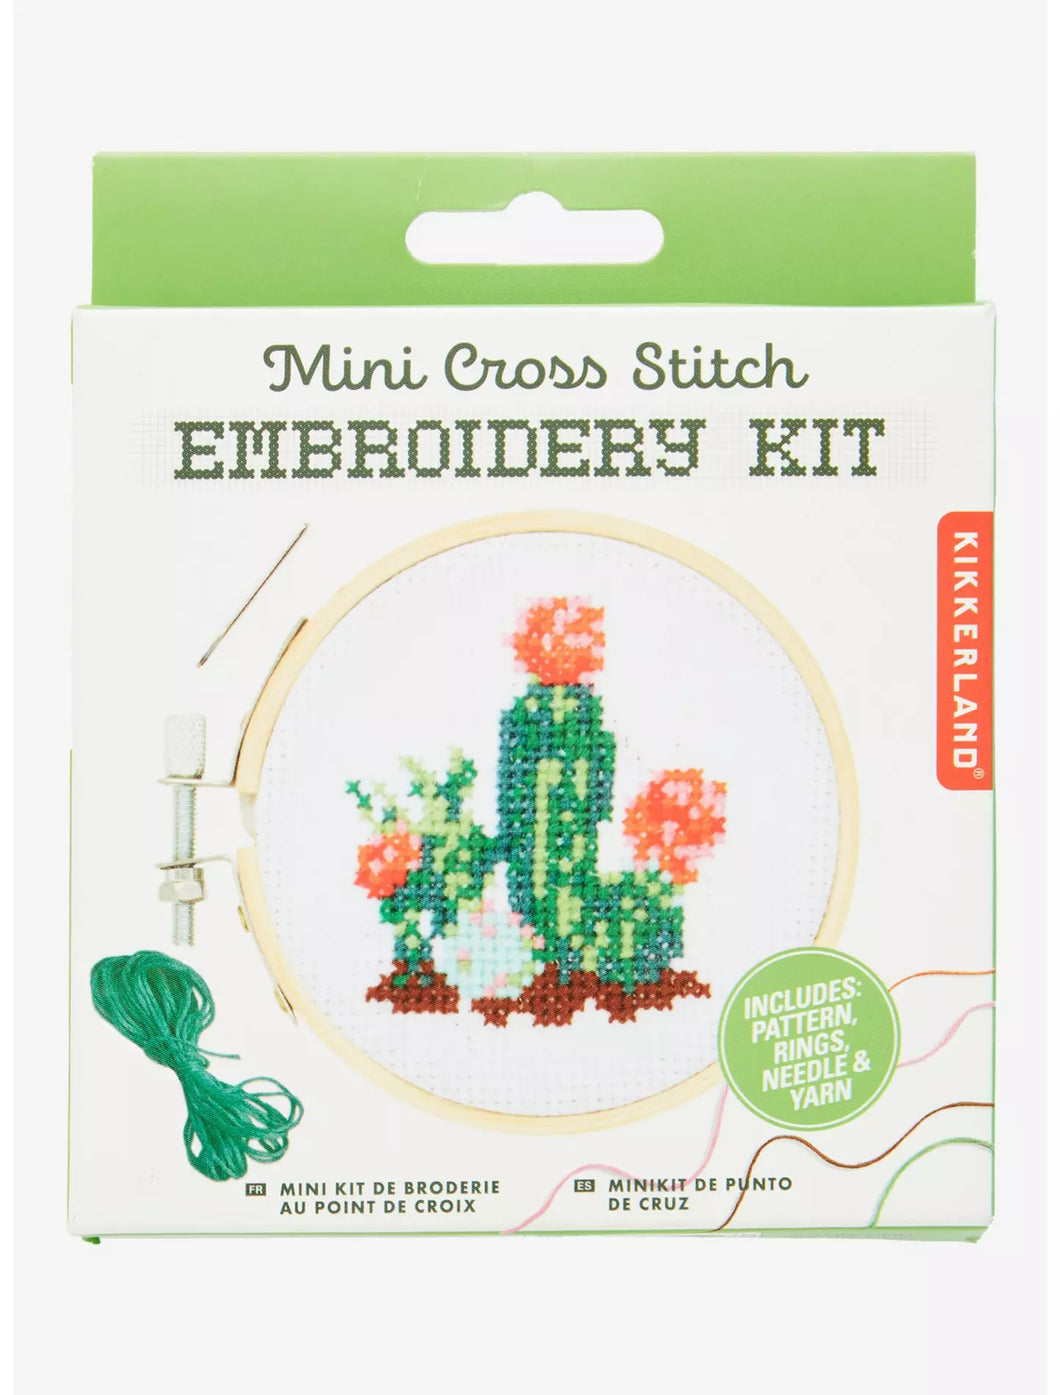 Mini Cactus Cross Stitch Embroidery Kit